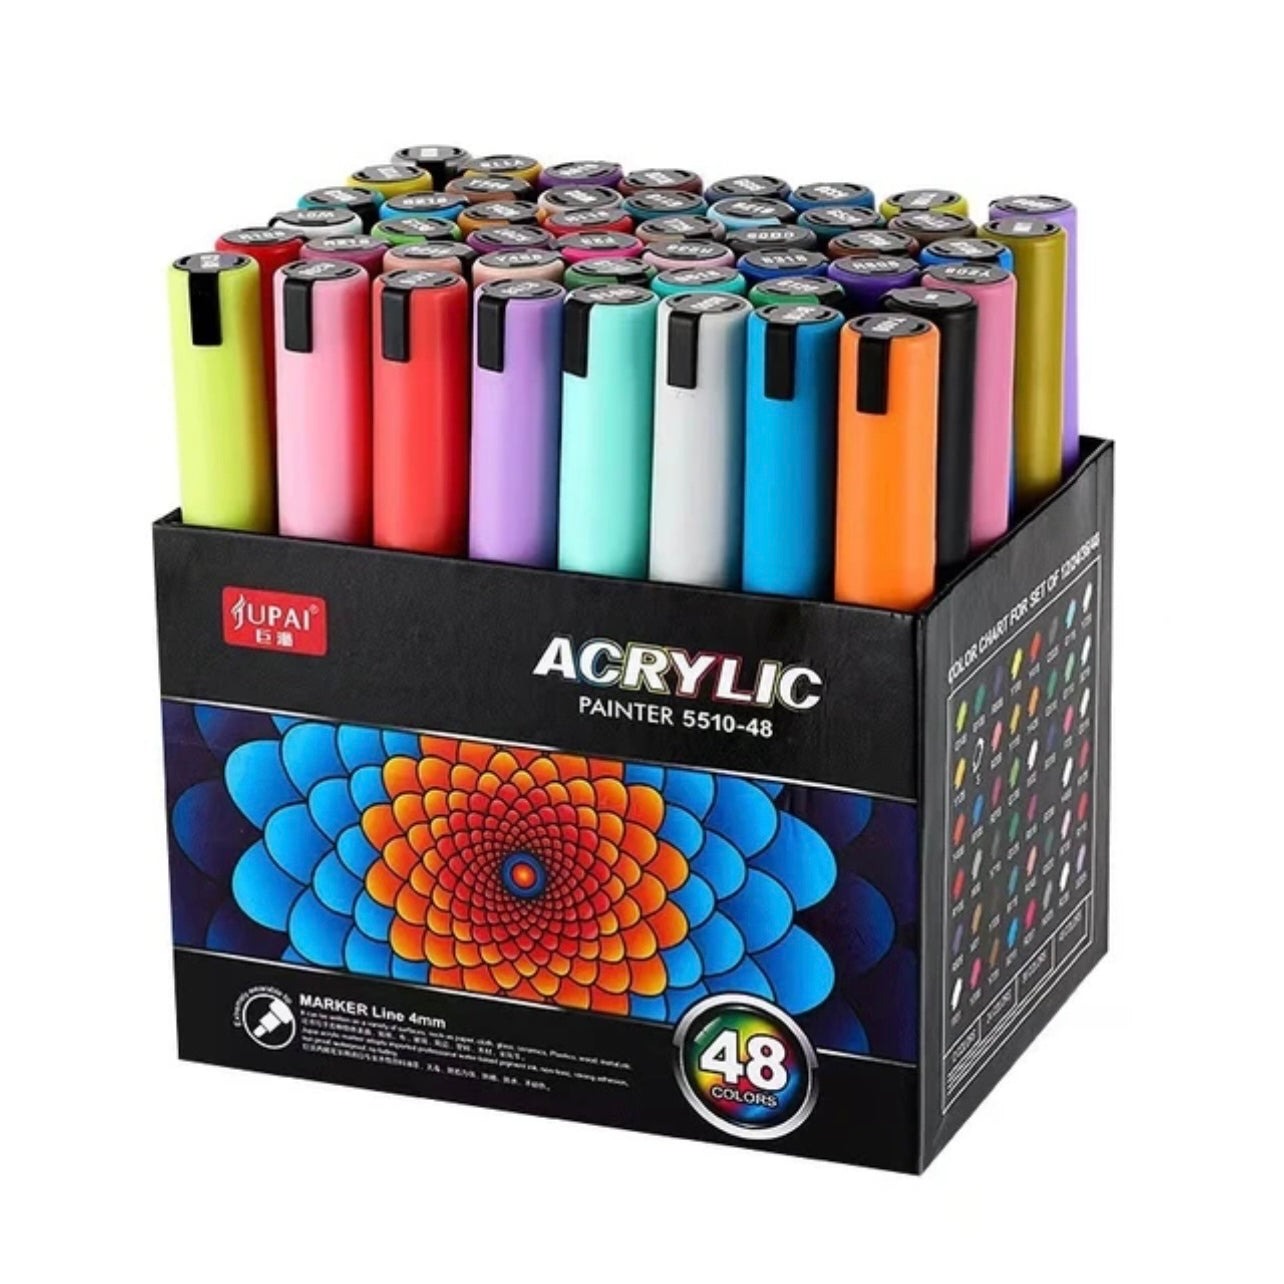 Jubai Acrylic Marker 48 Colors || الوان اكريليك ماركر جوباي ٤٨ لون 